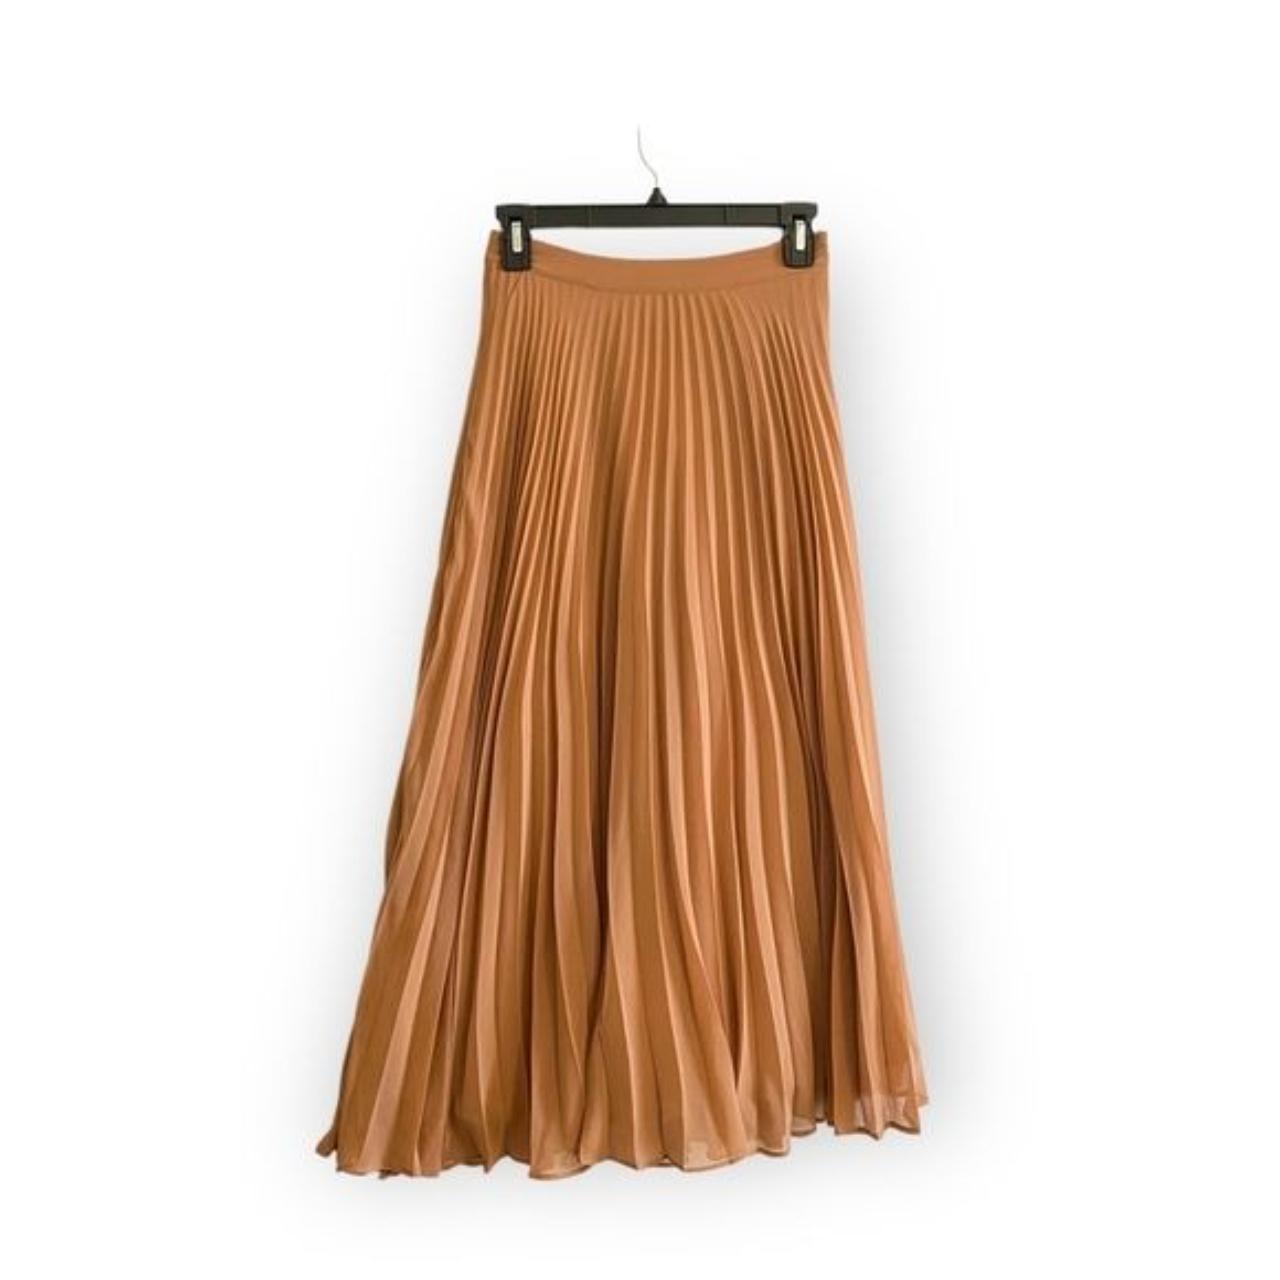 Product Image 1 - New with tag
Kookai Pleated Skirt,